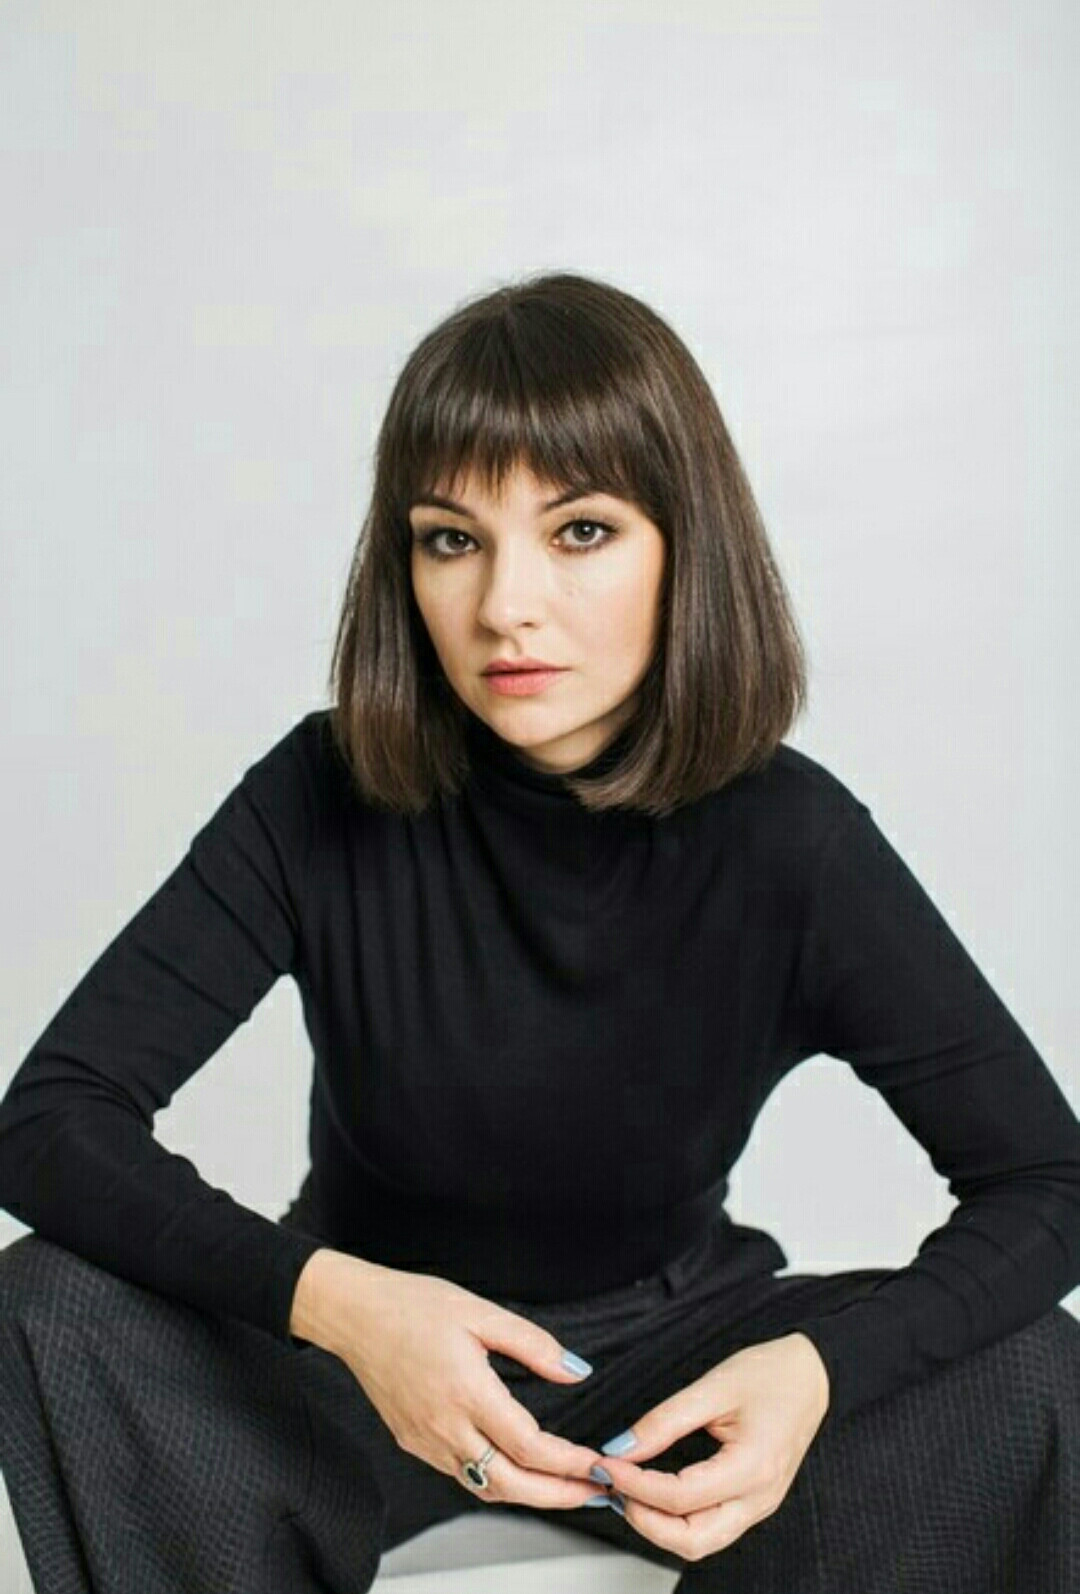 Ольга Павловец (Olga Pavlovets)